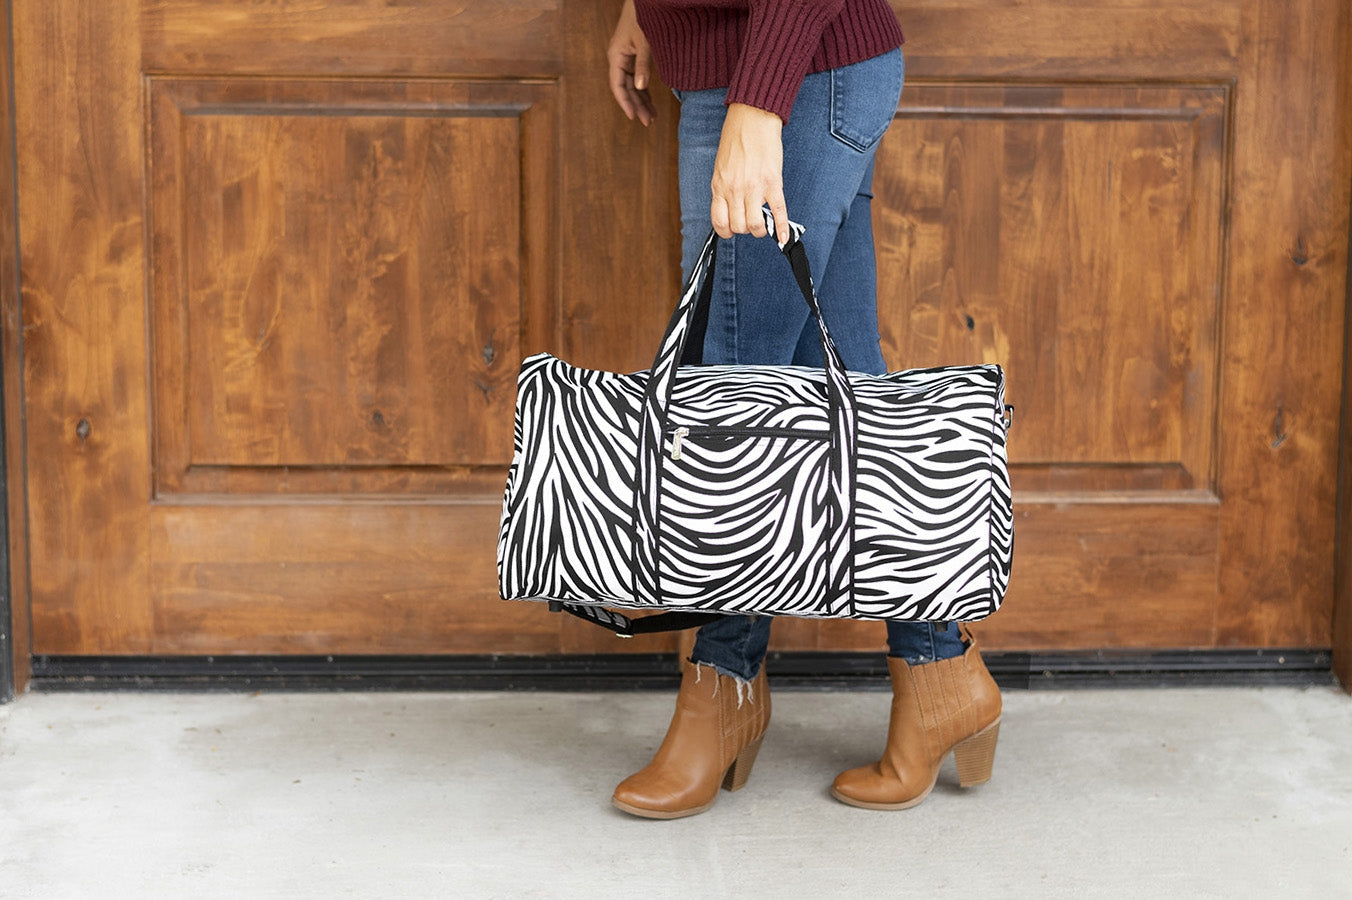 Zebra Duffel Bag